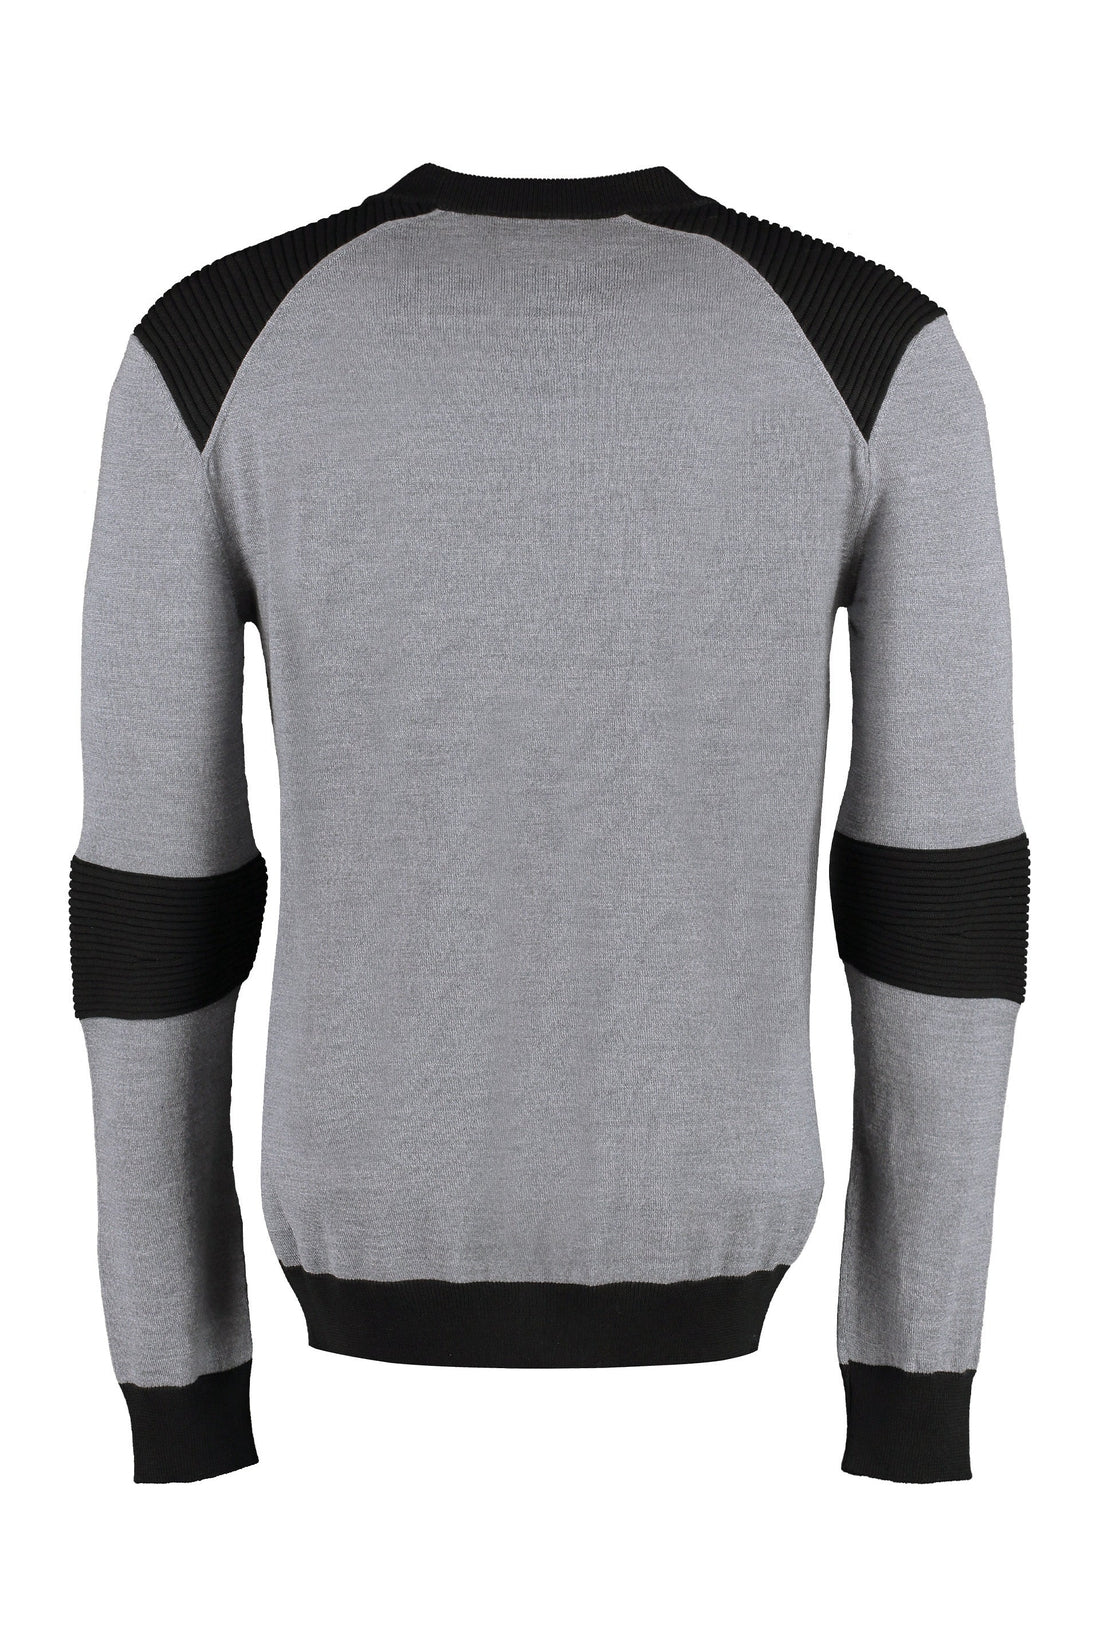 Balmain-OUTLET-SALE-Intarsia wool sweater-ARCHIVIST